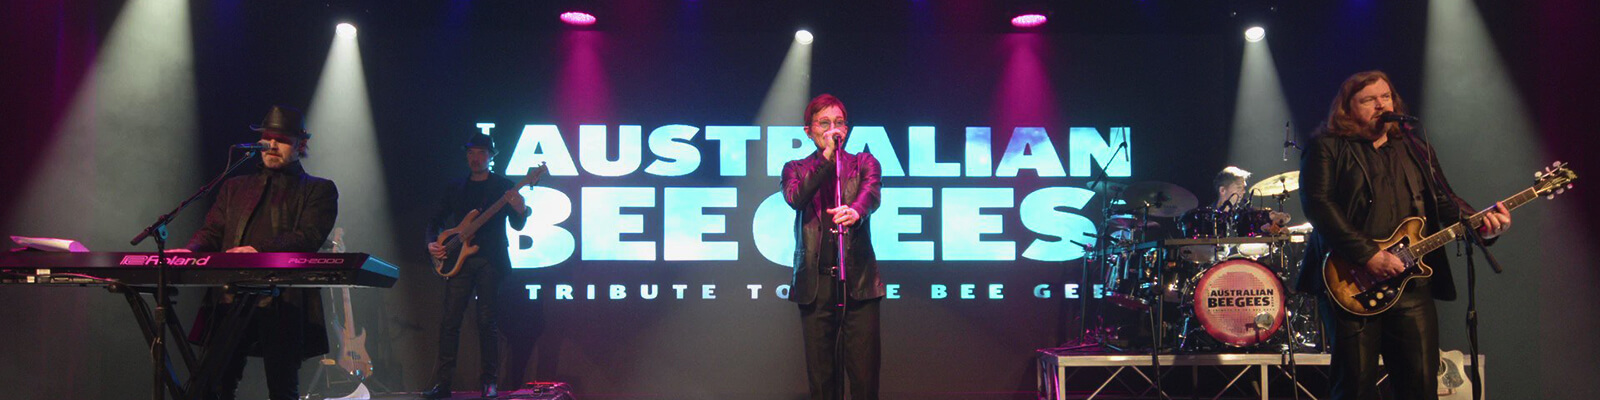 Australian Bee Gees Tribute Bee Gees Coupons